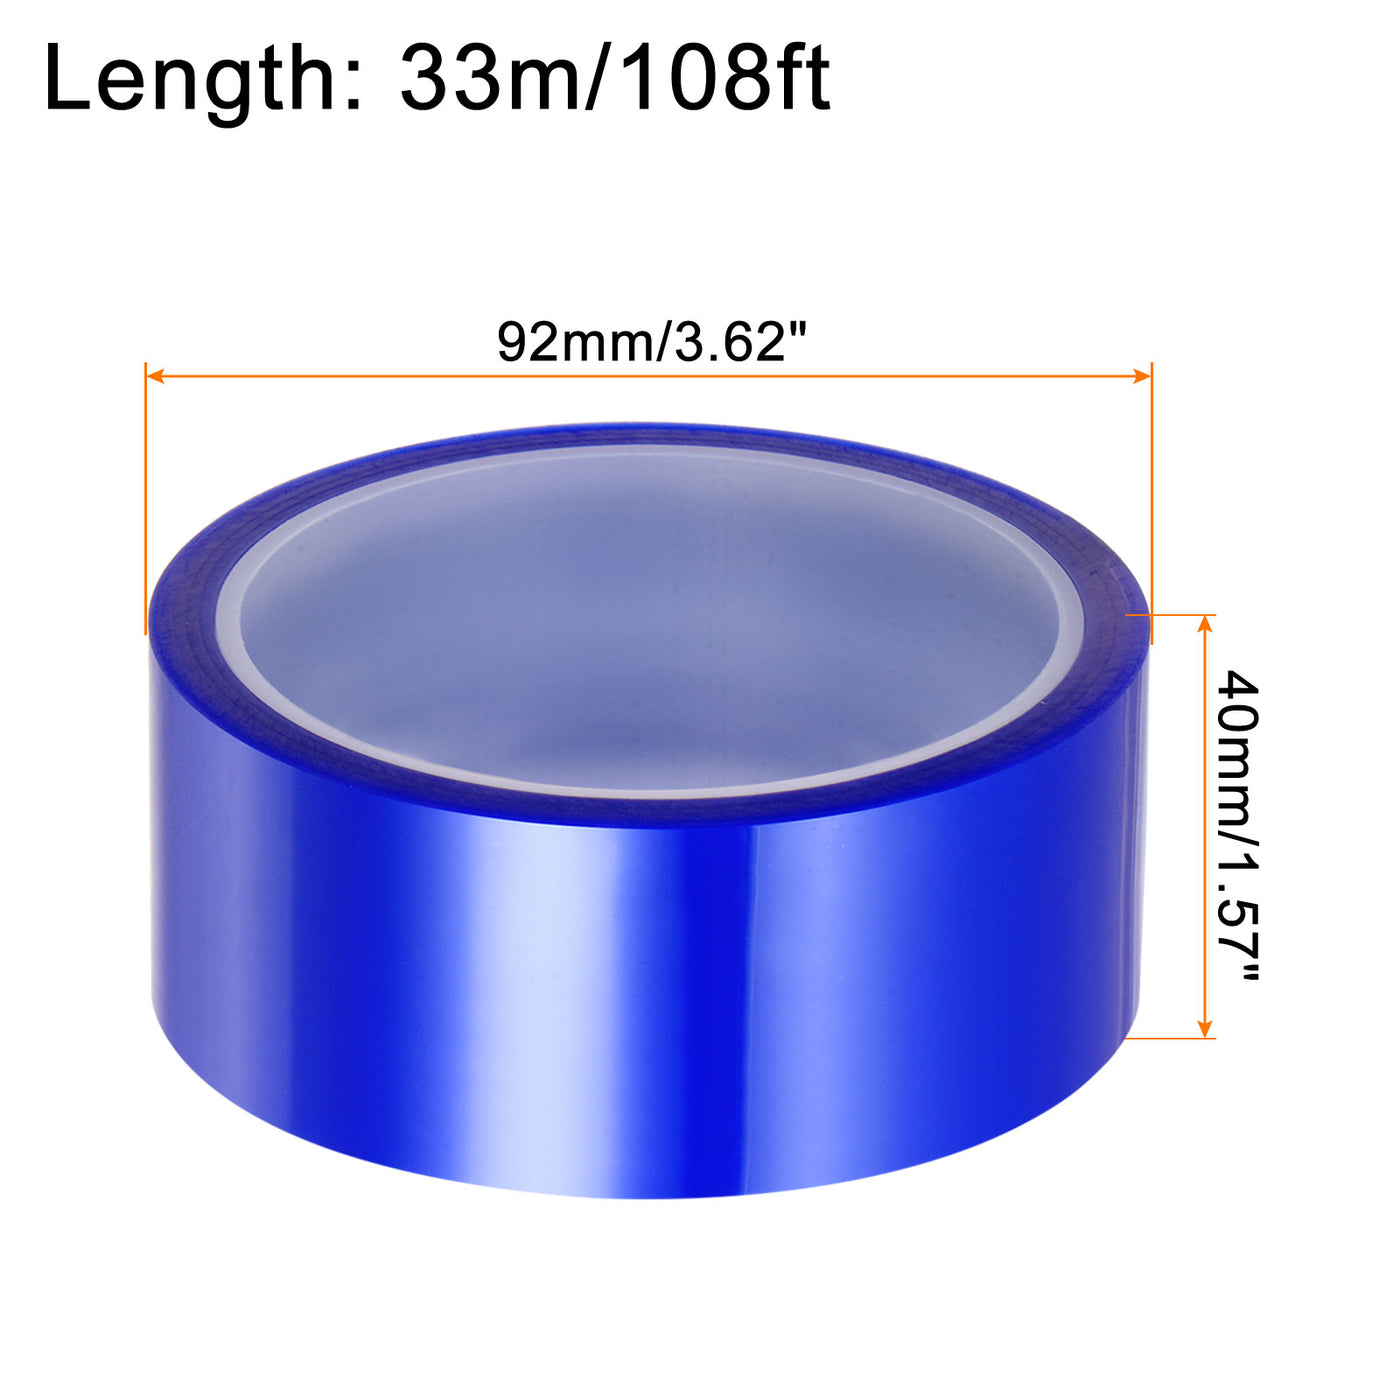 Harfington 2 Rolls Heat Tape High Temperature 40mmx33m(108ft) Sublimation Tape Blue